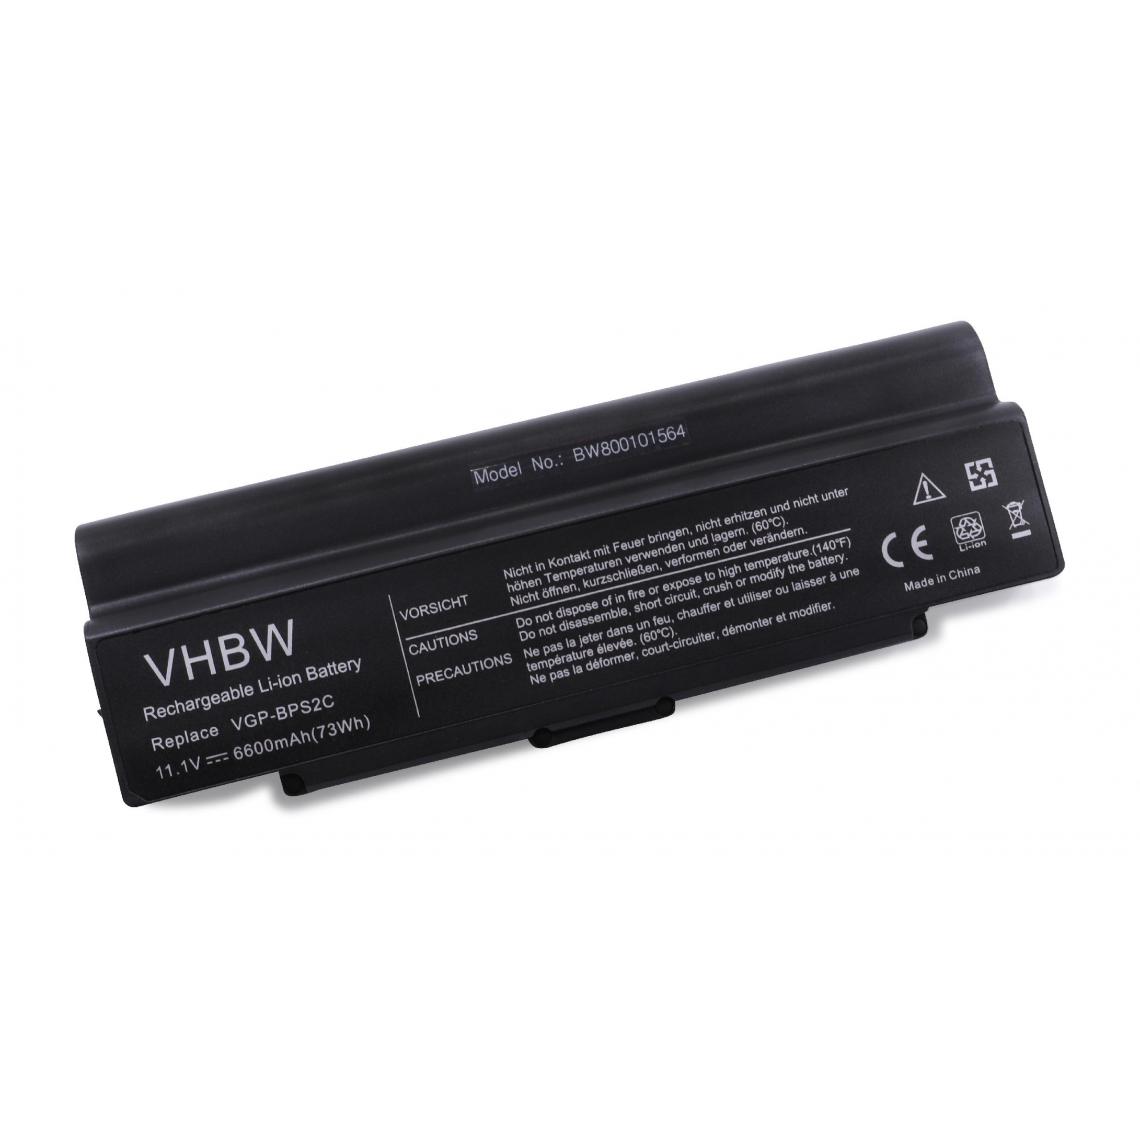 Vhbw - vhbw batterie Li-Ion 6600mAh (11.1V) pour Notebook ordinateur Sony VAIO VGN-C11C/W, VGN-C12C, VGN-C12C/B, VGN-C12C/W,VGN-C140G/B,VGN-C140QG/B,VGP-BPS2 - Batterie PC Portable